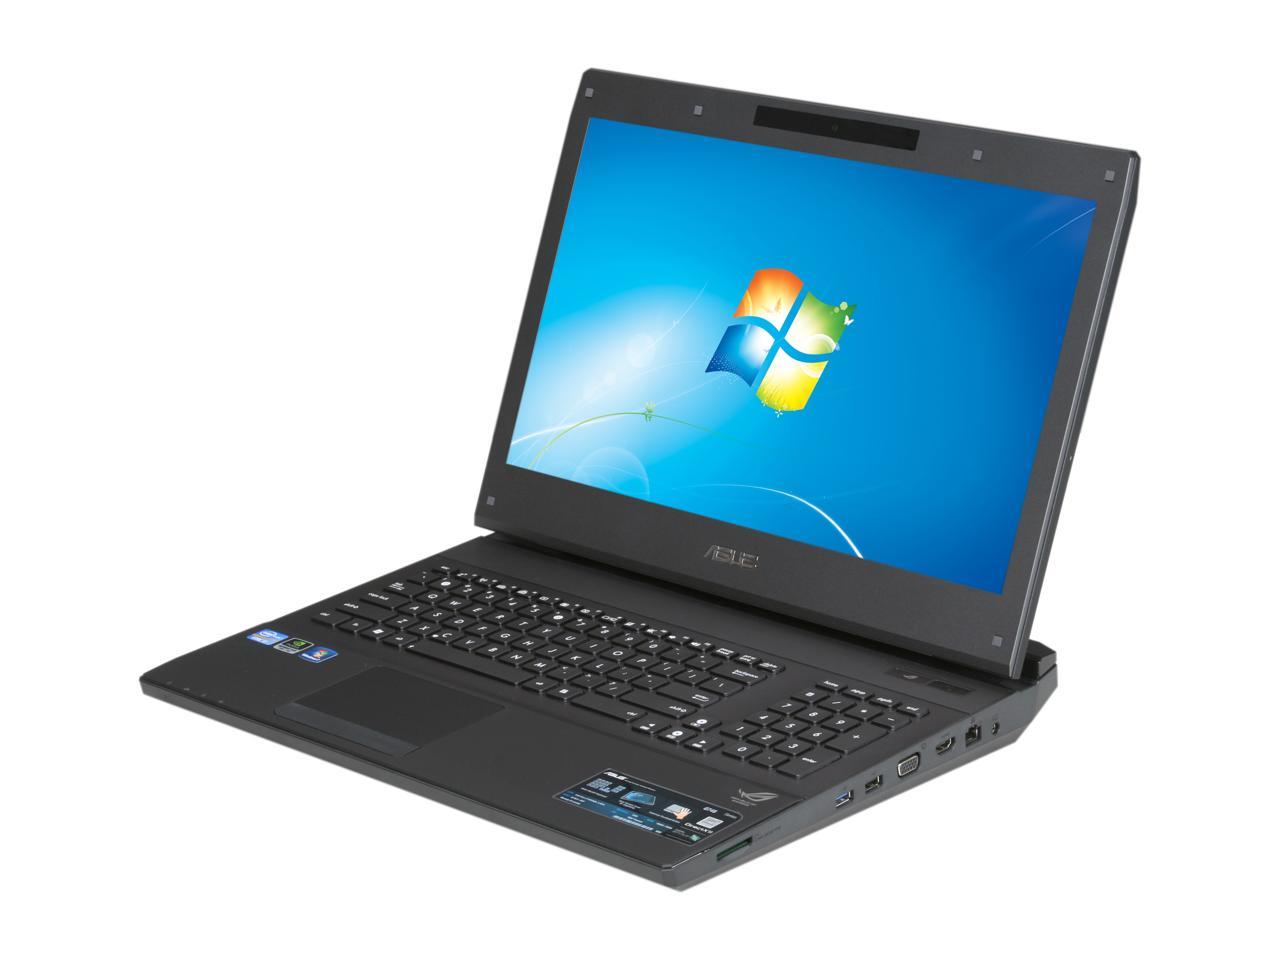 bryder ud Forbipasserende sikring ASUS Laptop G74 Series G74SX-A1 Intel Core i7 2nd Gen - Newegg.com